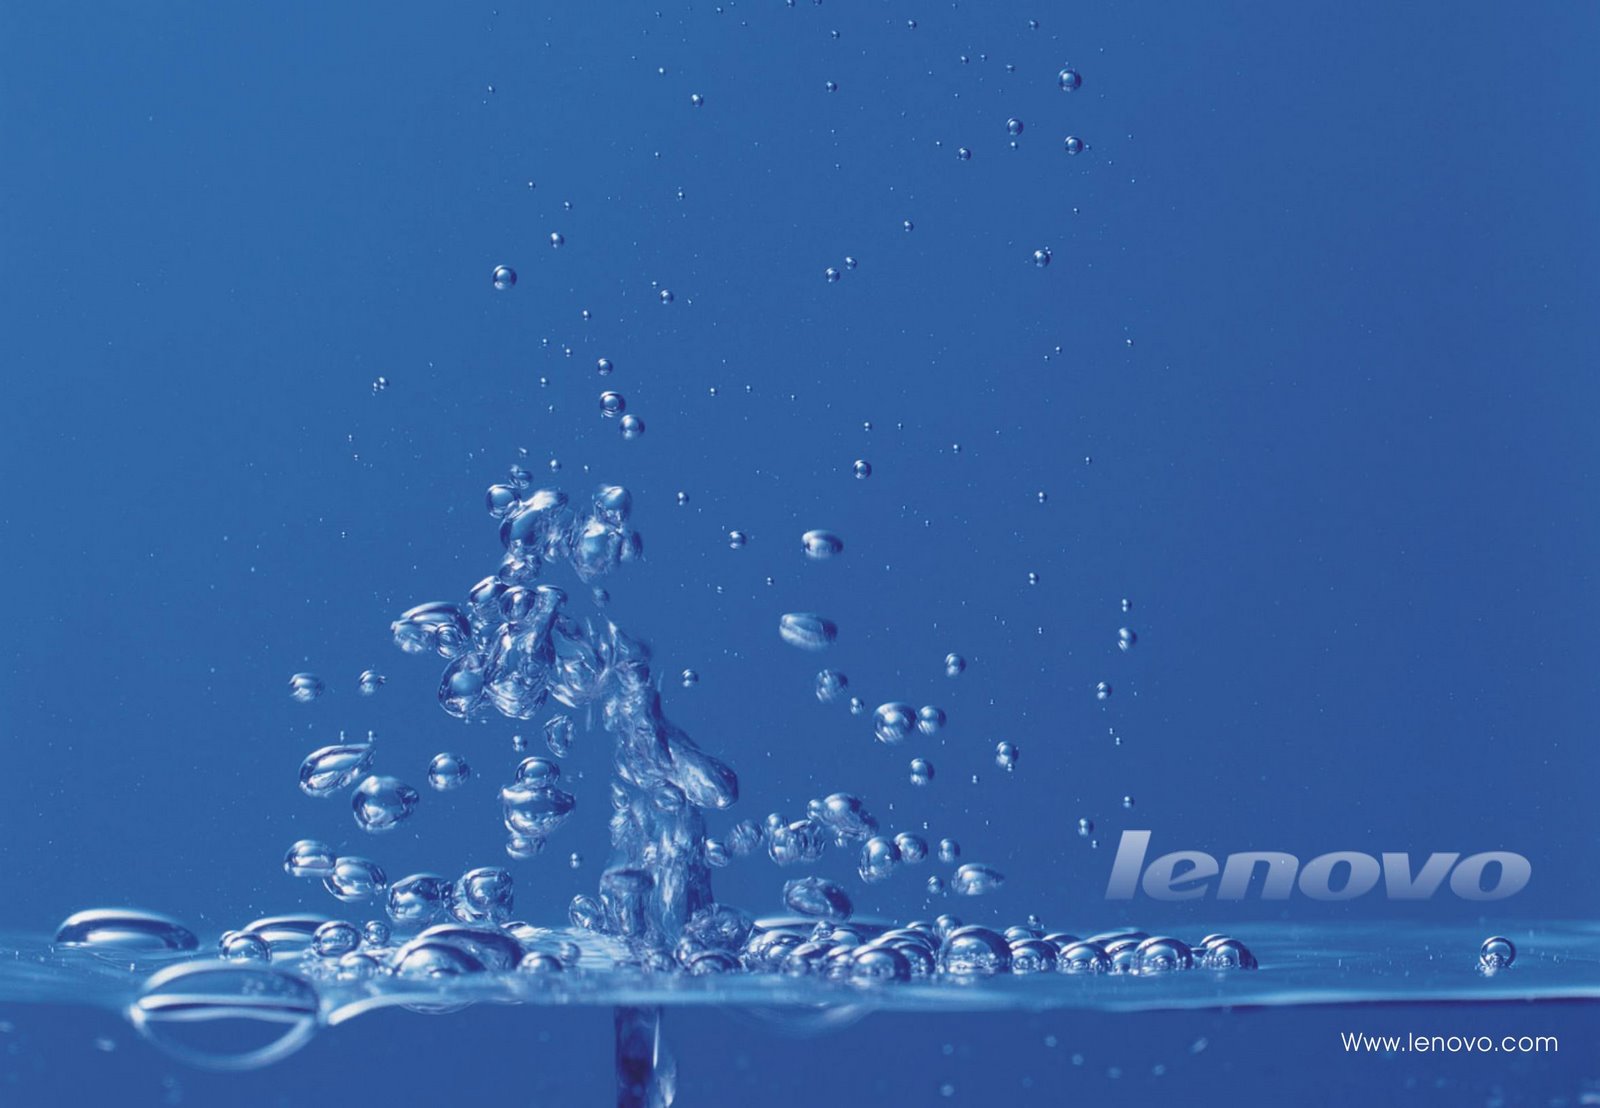 Lenovo Yoga 2 Wallpaper - WallpaperSafari